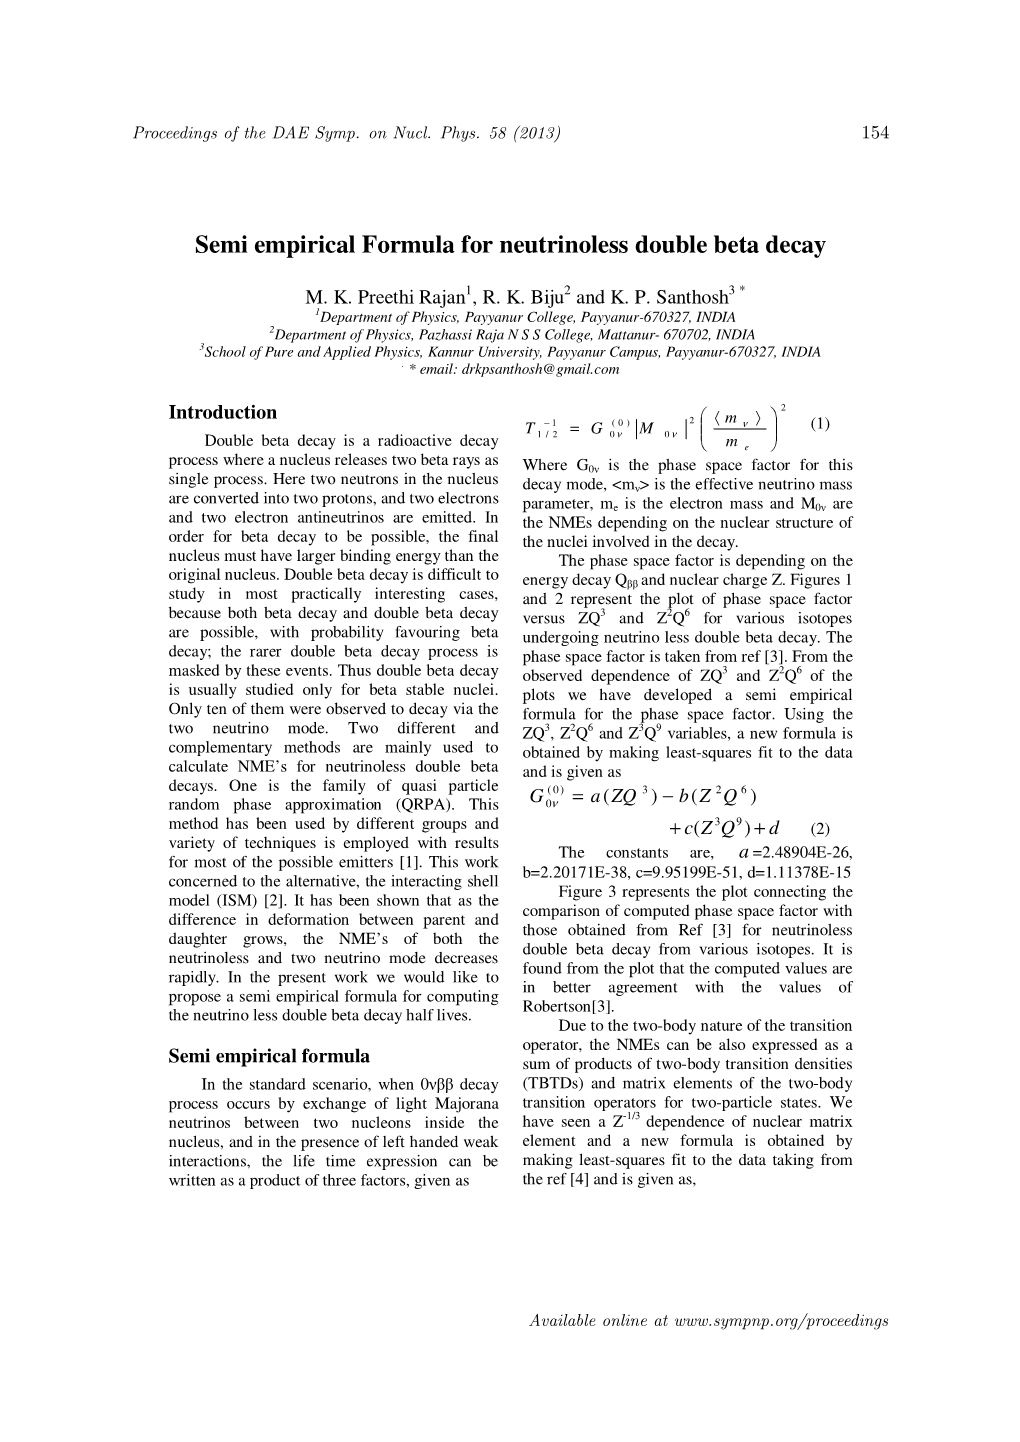 Semi Empirical Formula for Neutrinoless Double Beta Decay